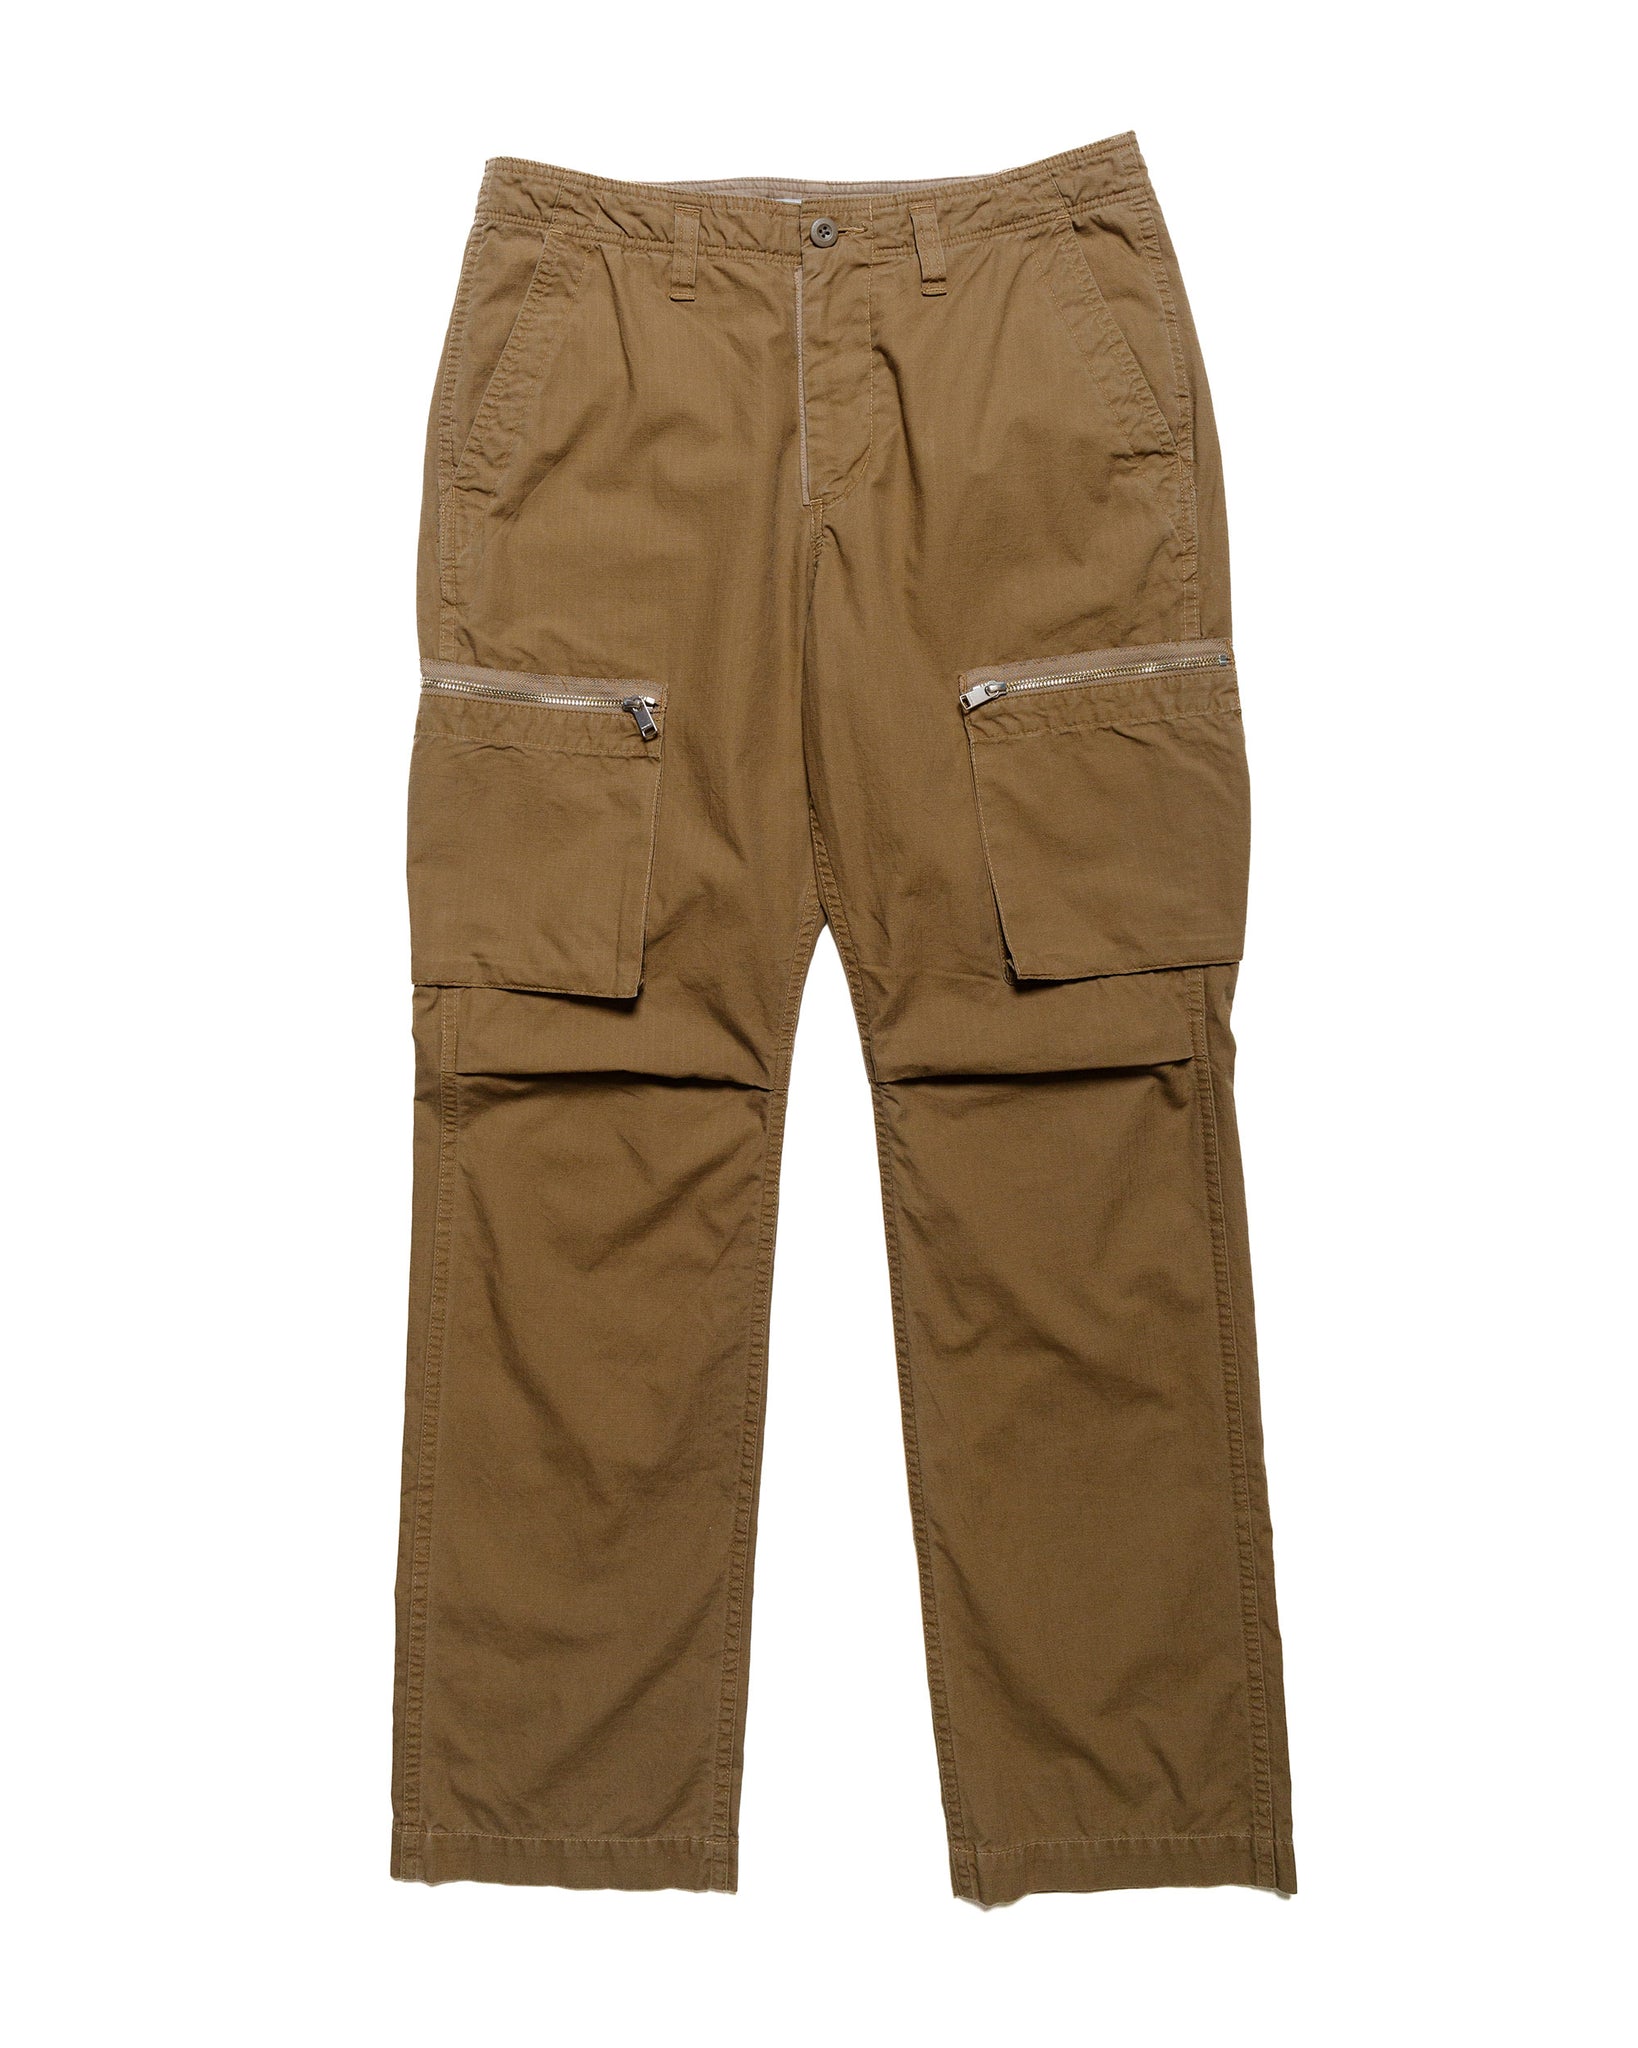 nonnative Trooper 6P Trousers Cotton Ripstop Light Brown